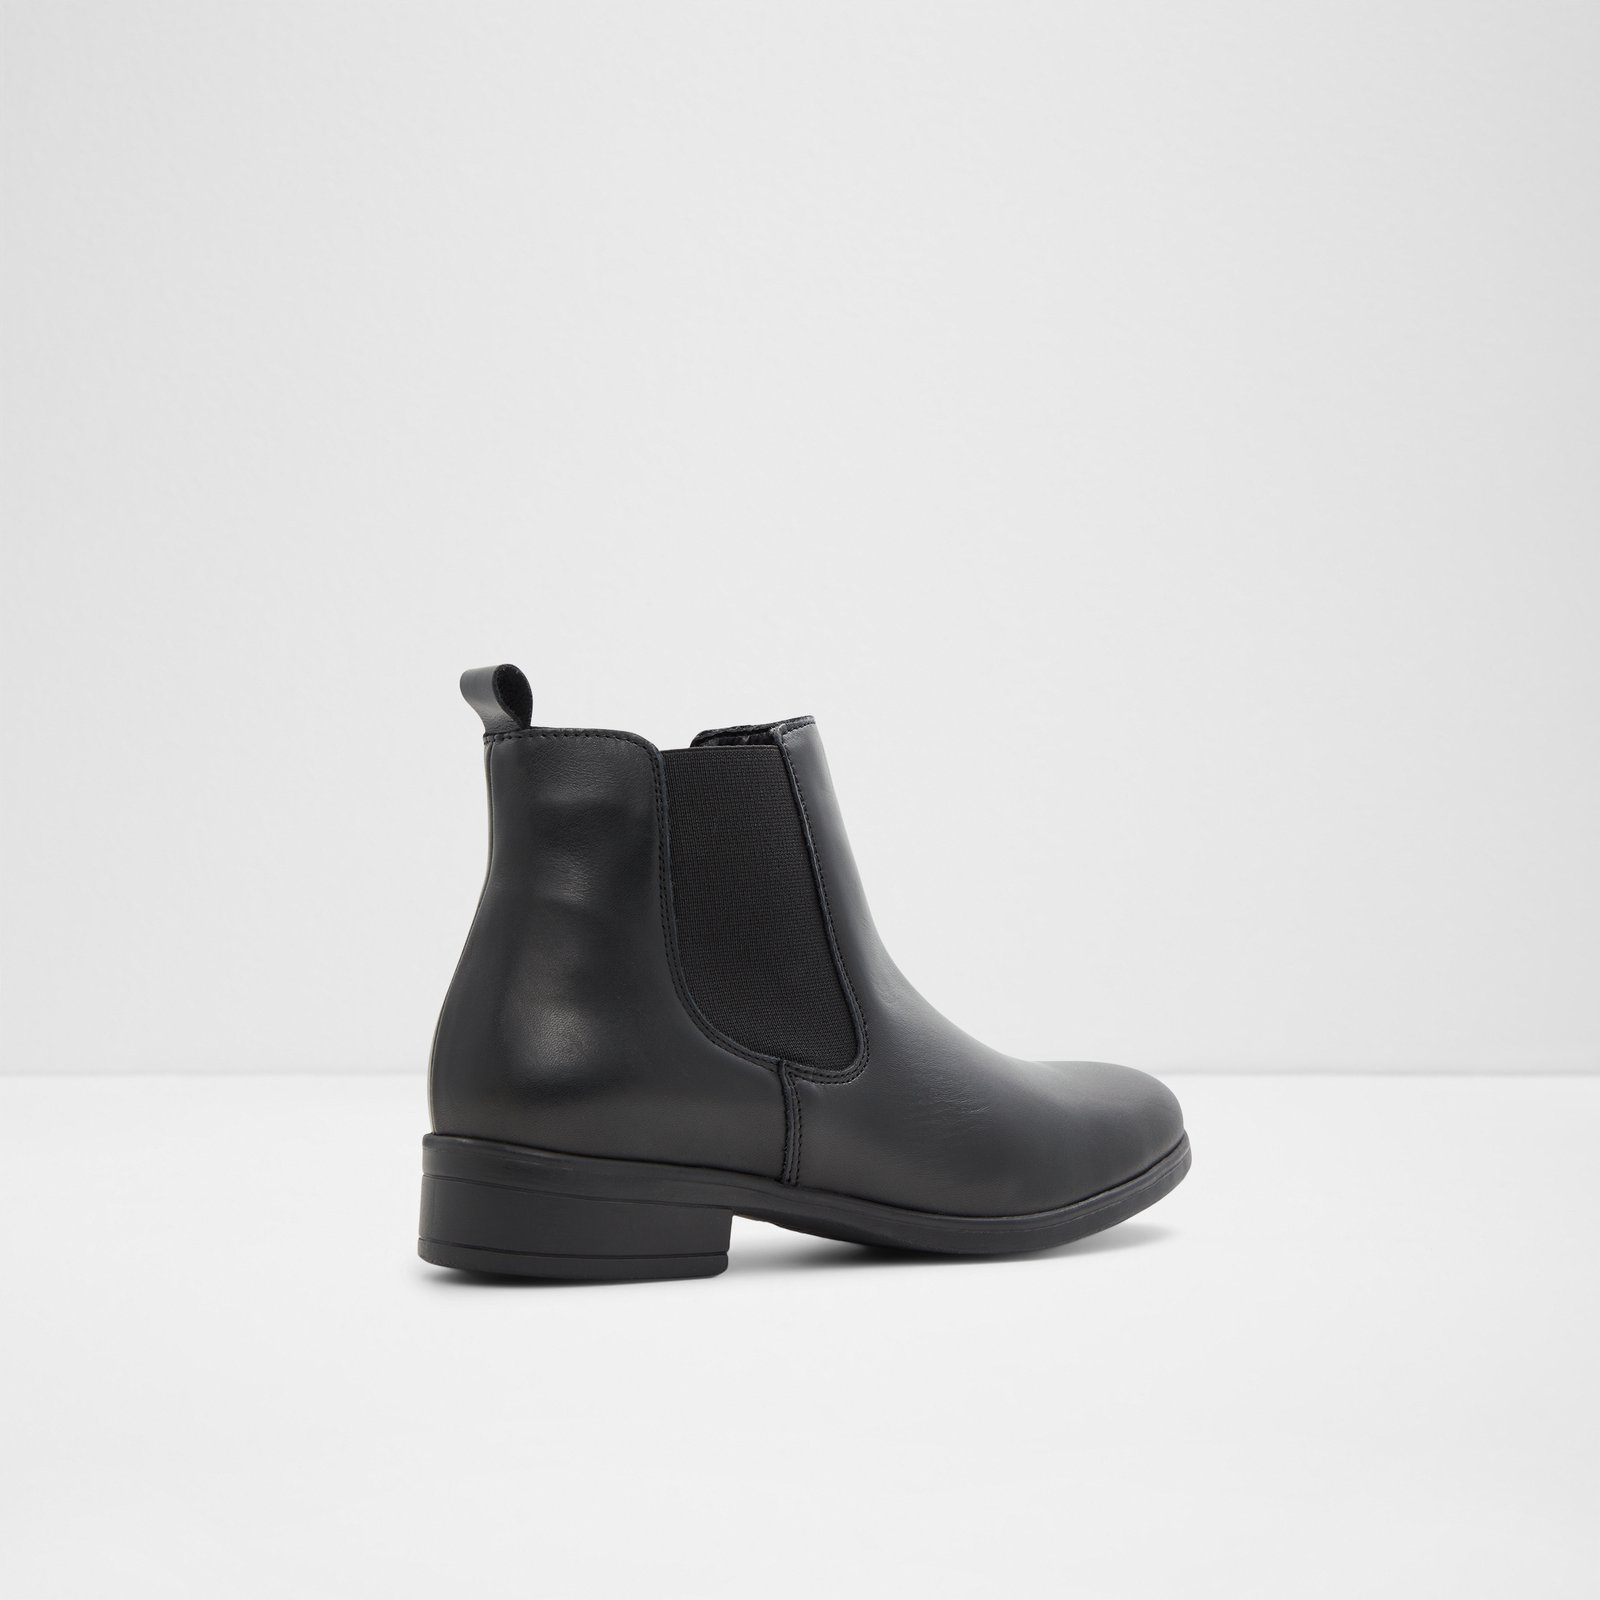 ALDO Wicoeni - Women's Boots Chelsea - Black